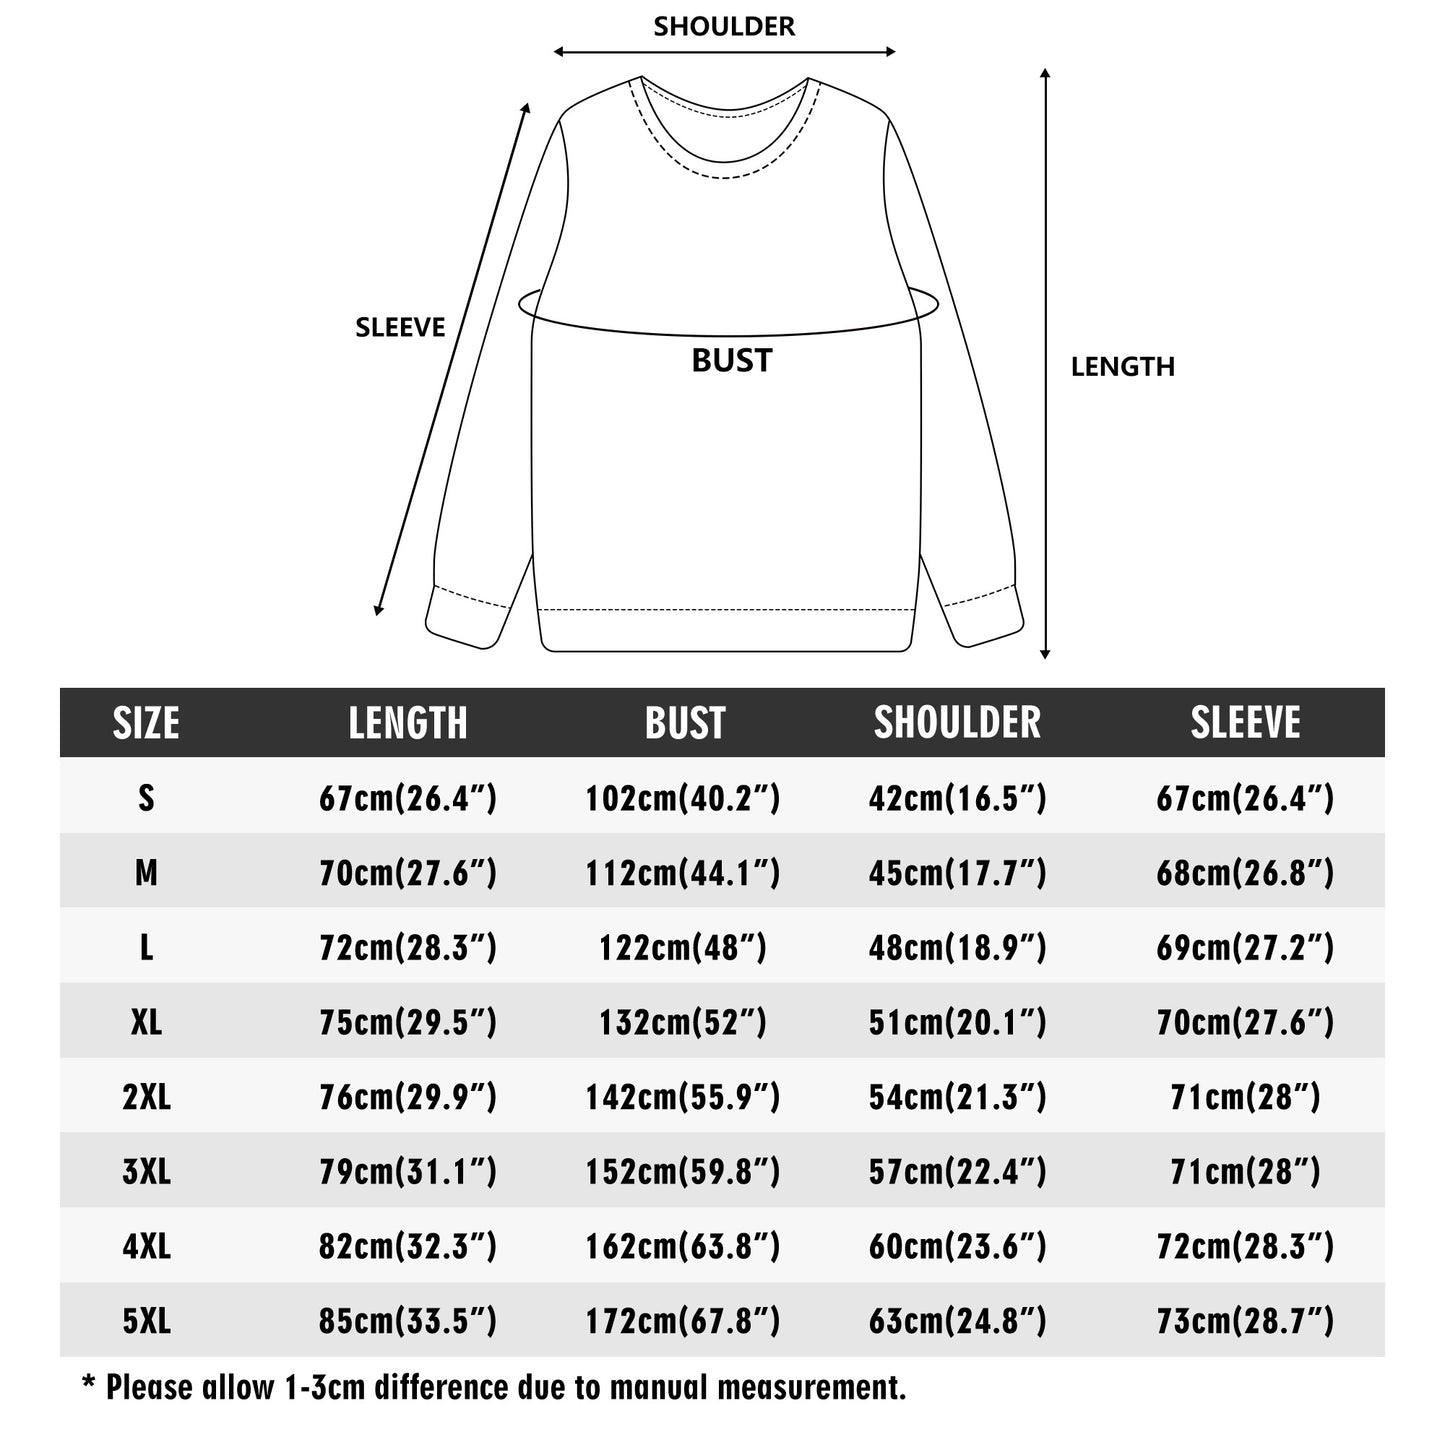 Neduz Unisex Unicorn Print Crewneck Pullover Sweatshirt - Festive, Lightweight, Versatile